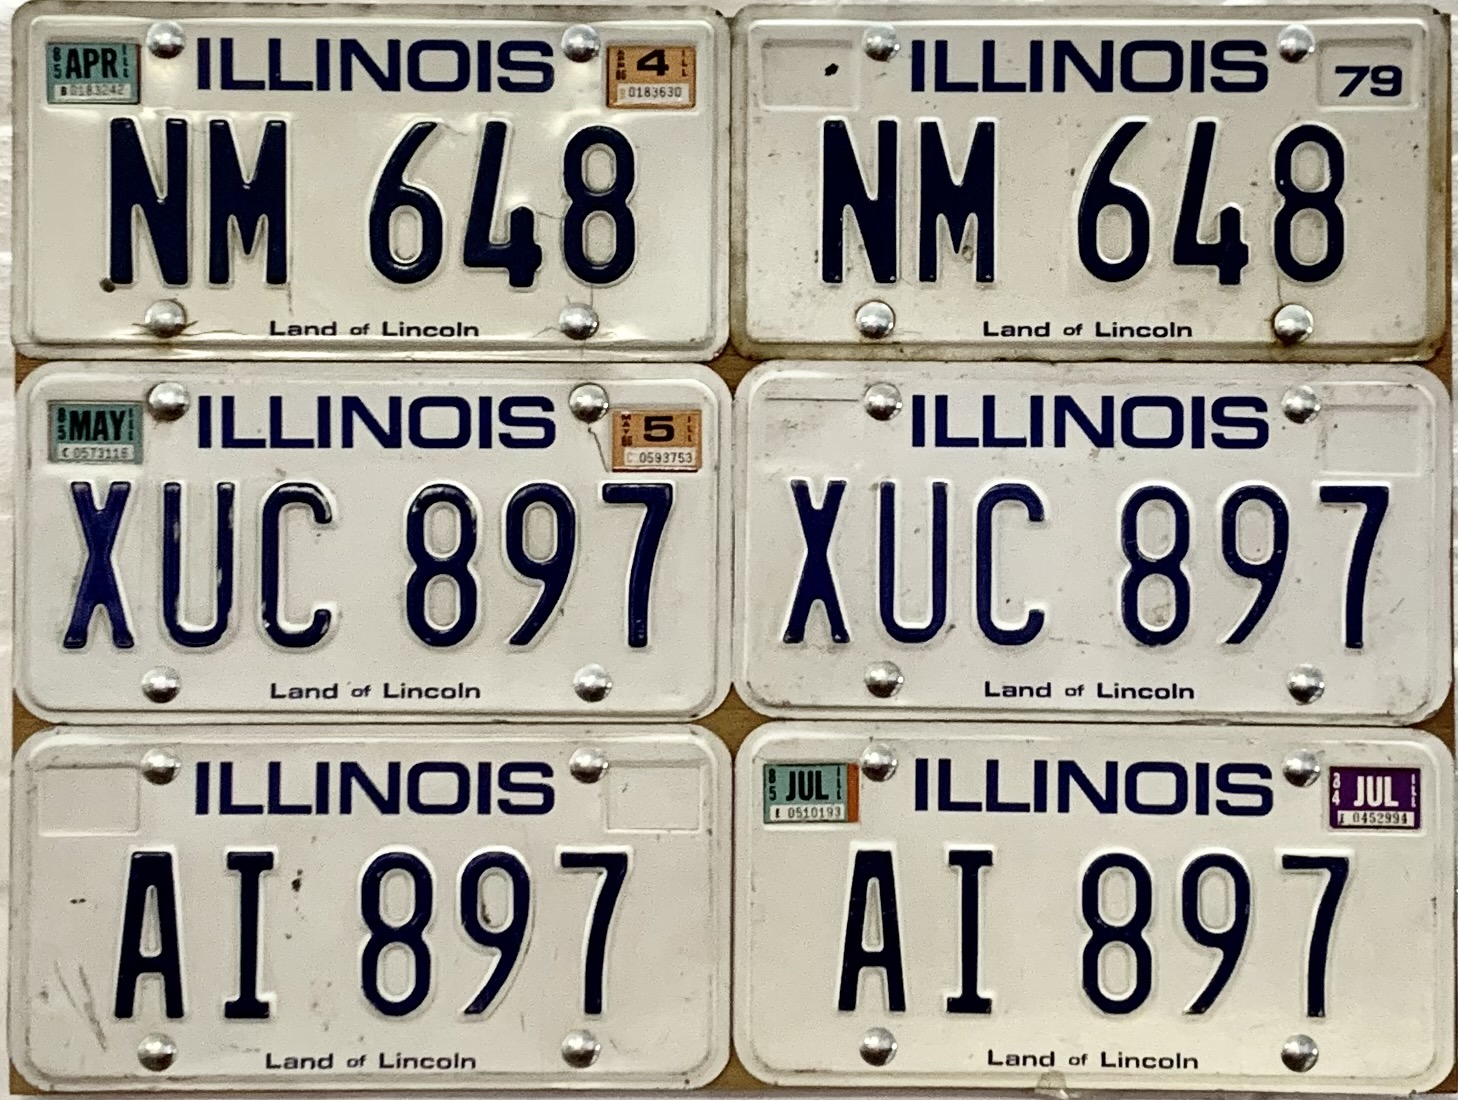 License plates on panel